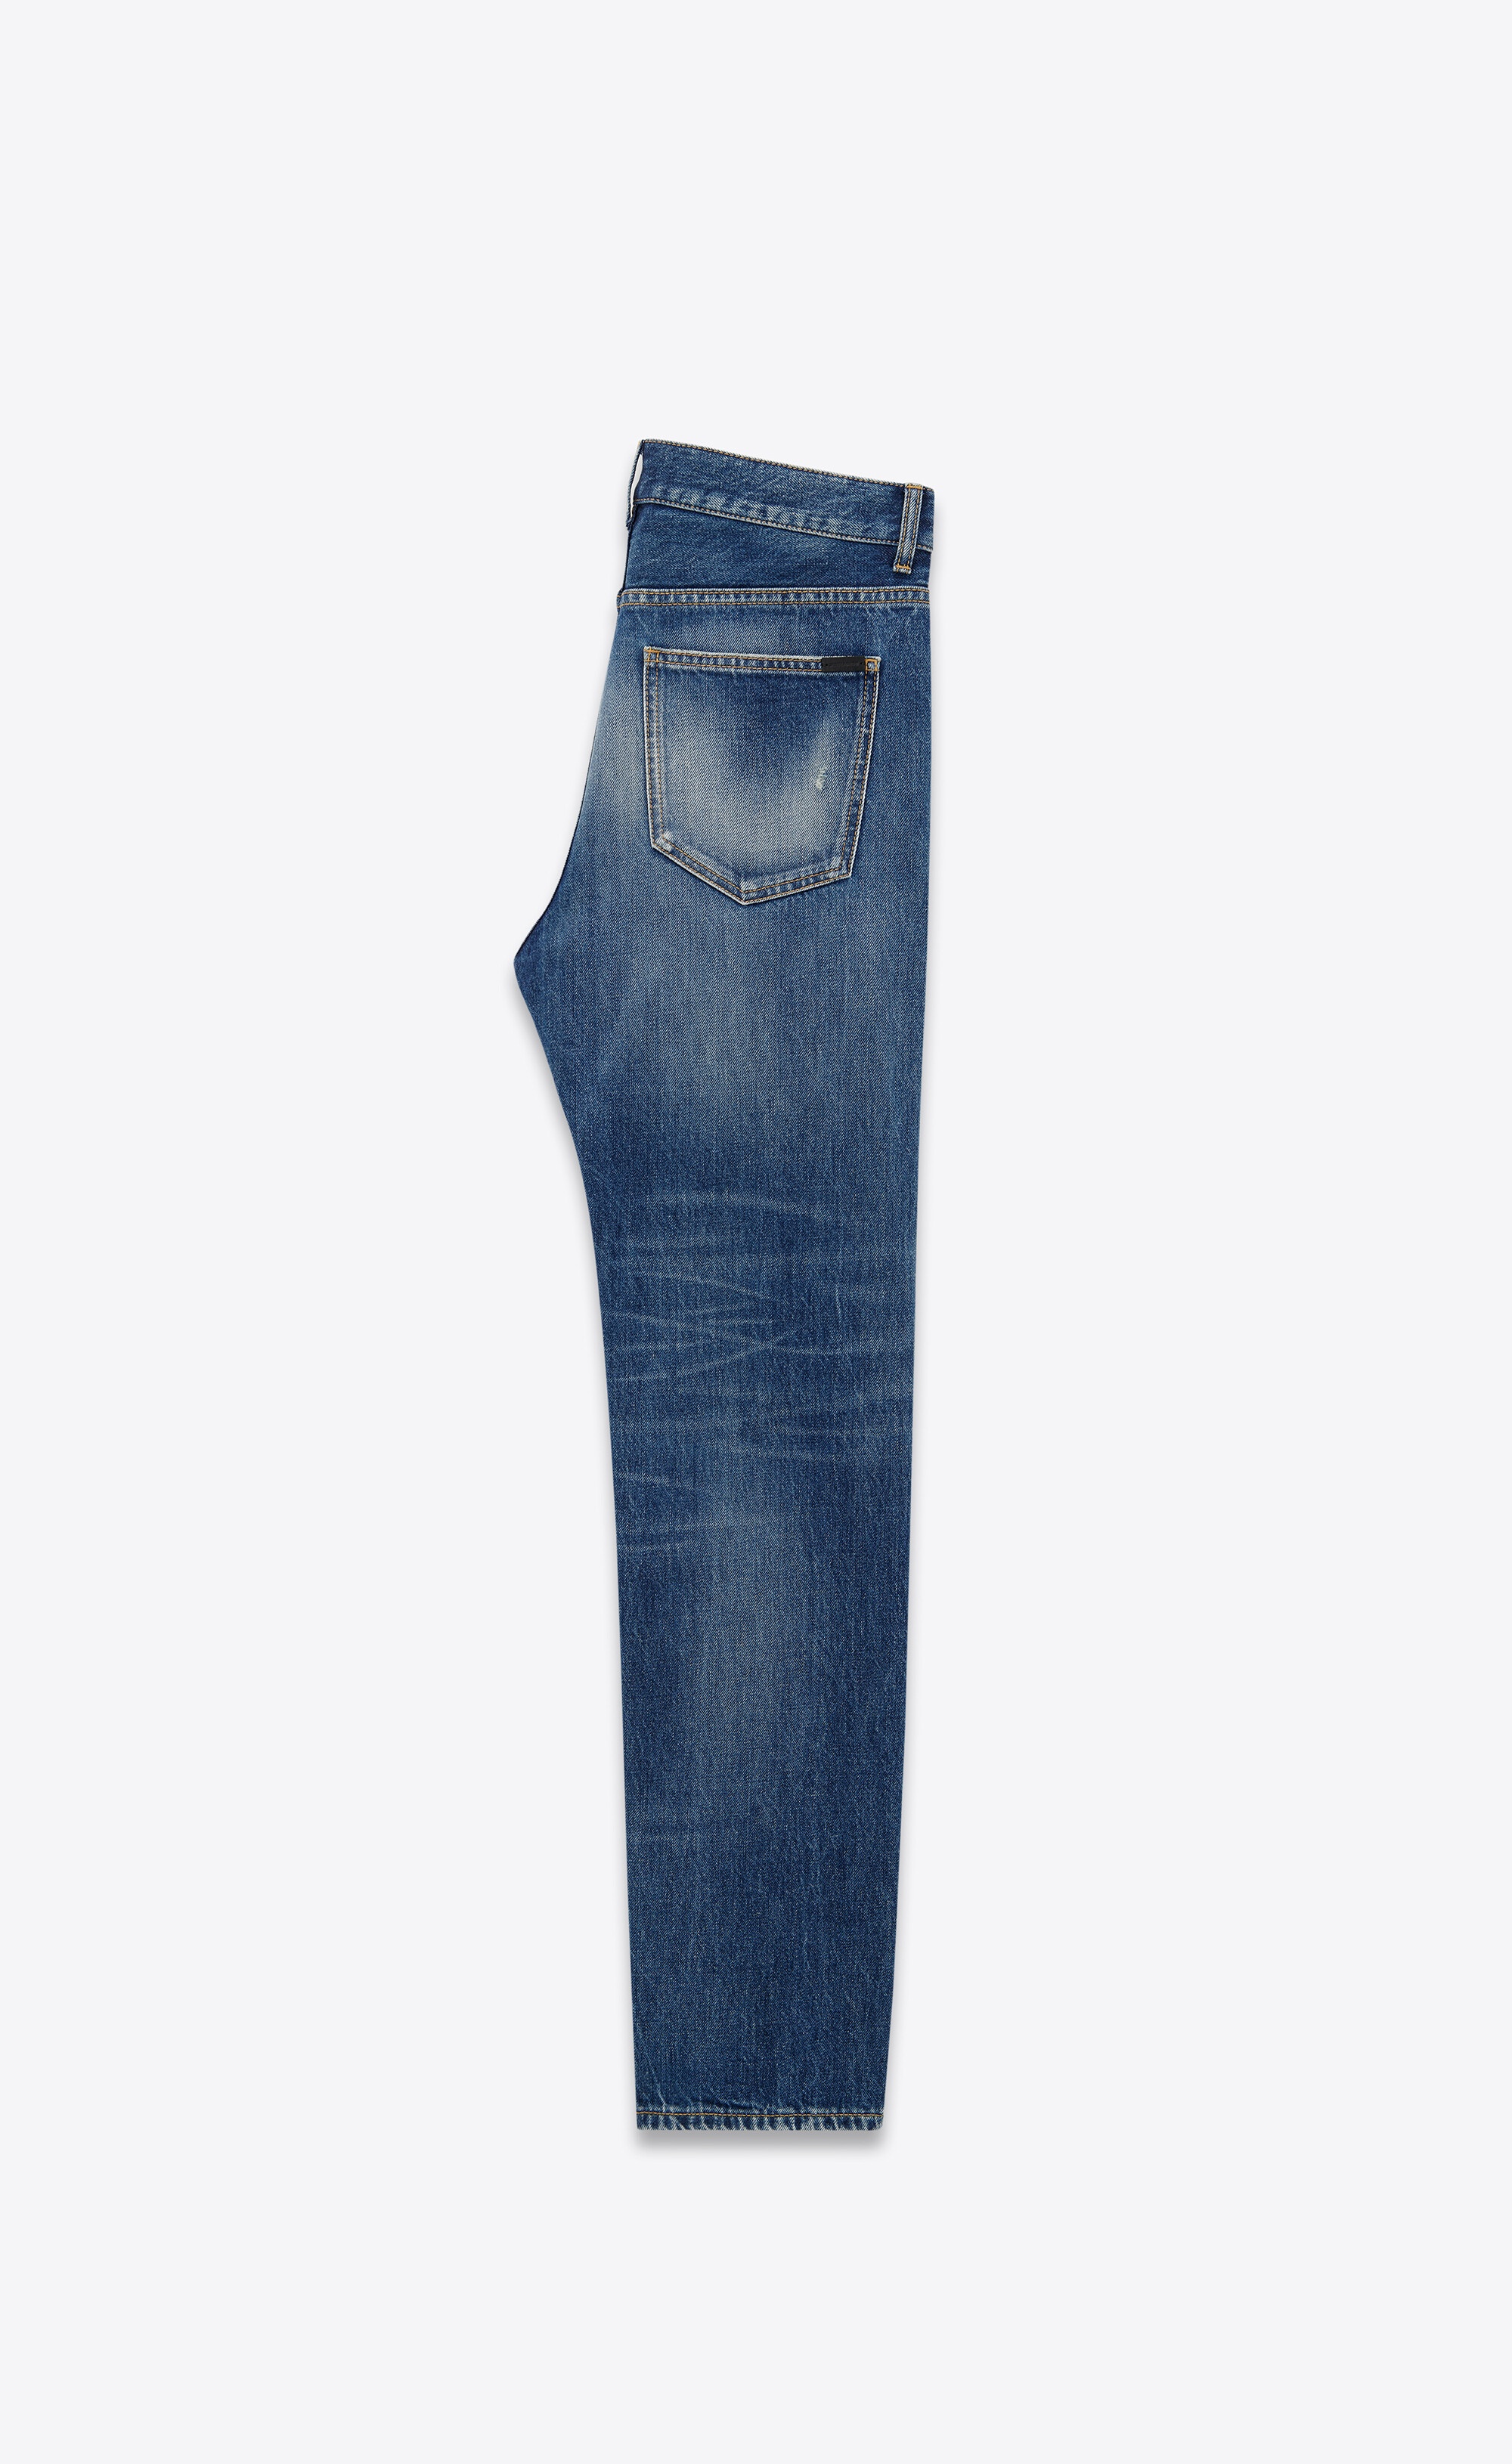 baggy jeans in deauville beach blue denim - 3